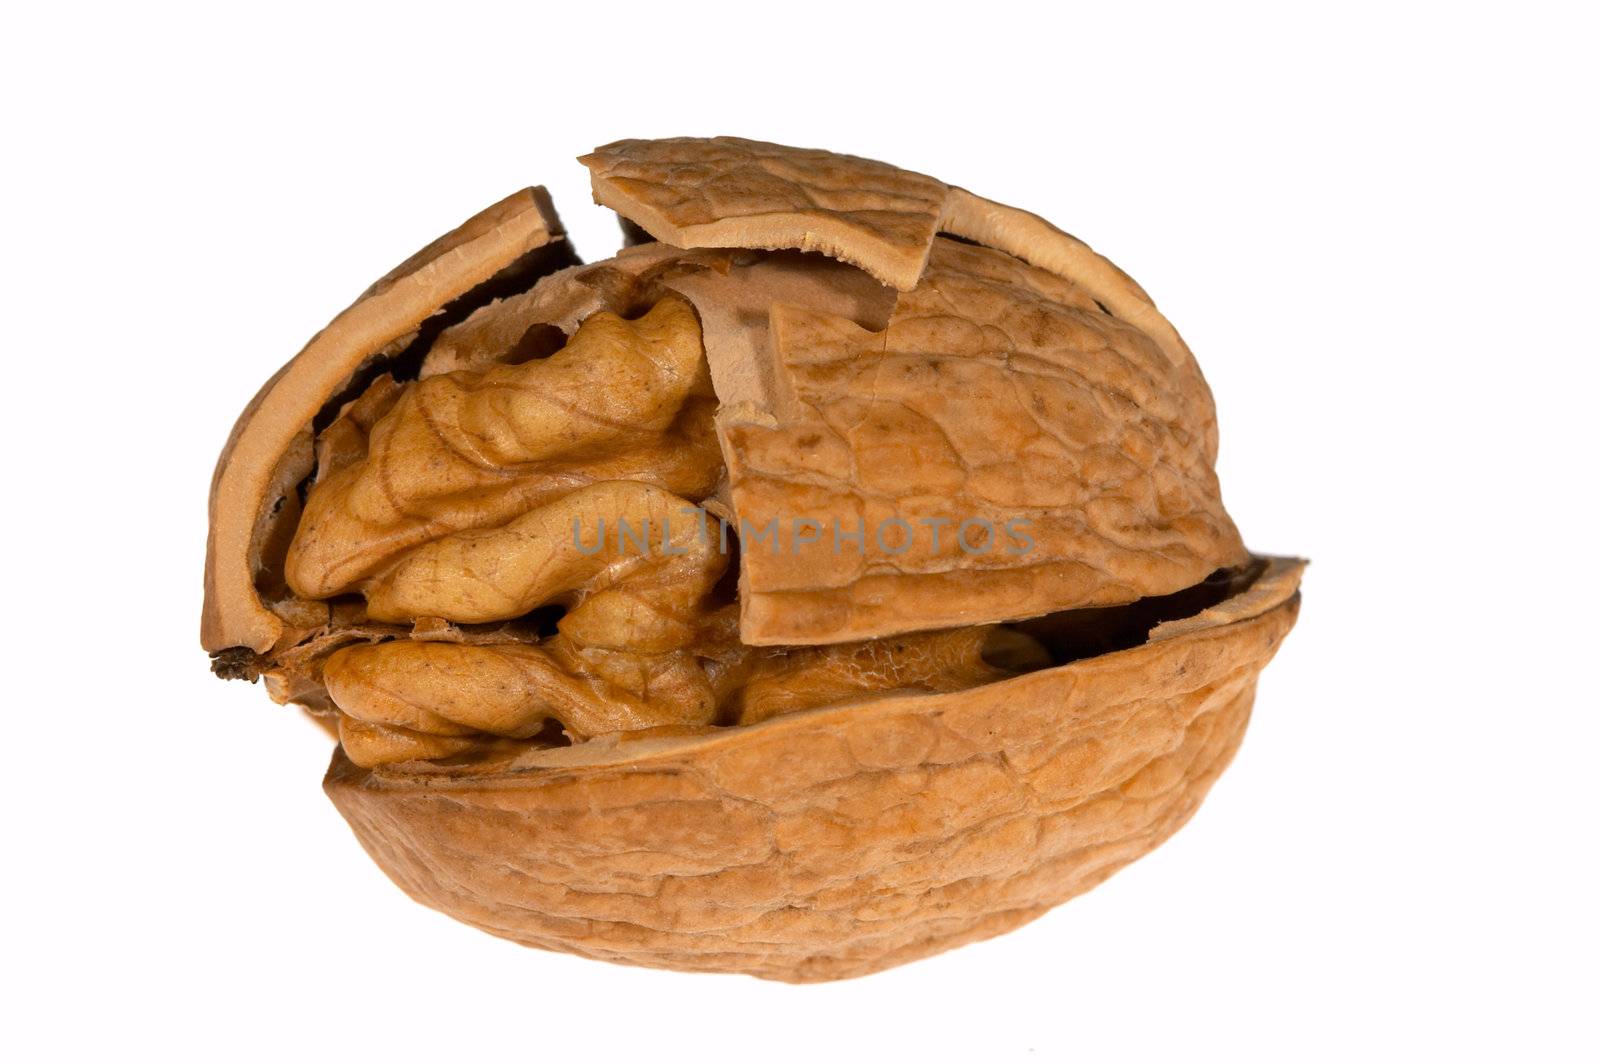 Cracked walnut by Ukrainian